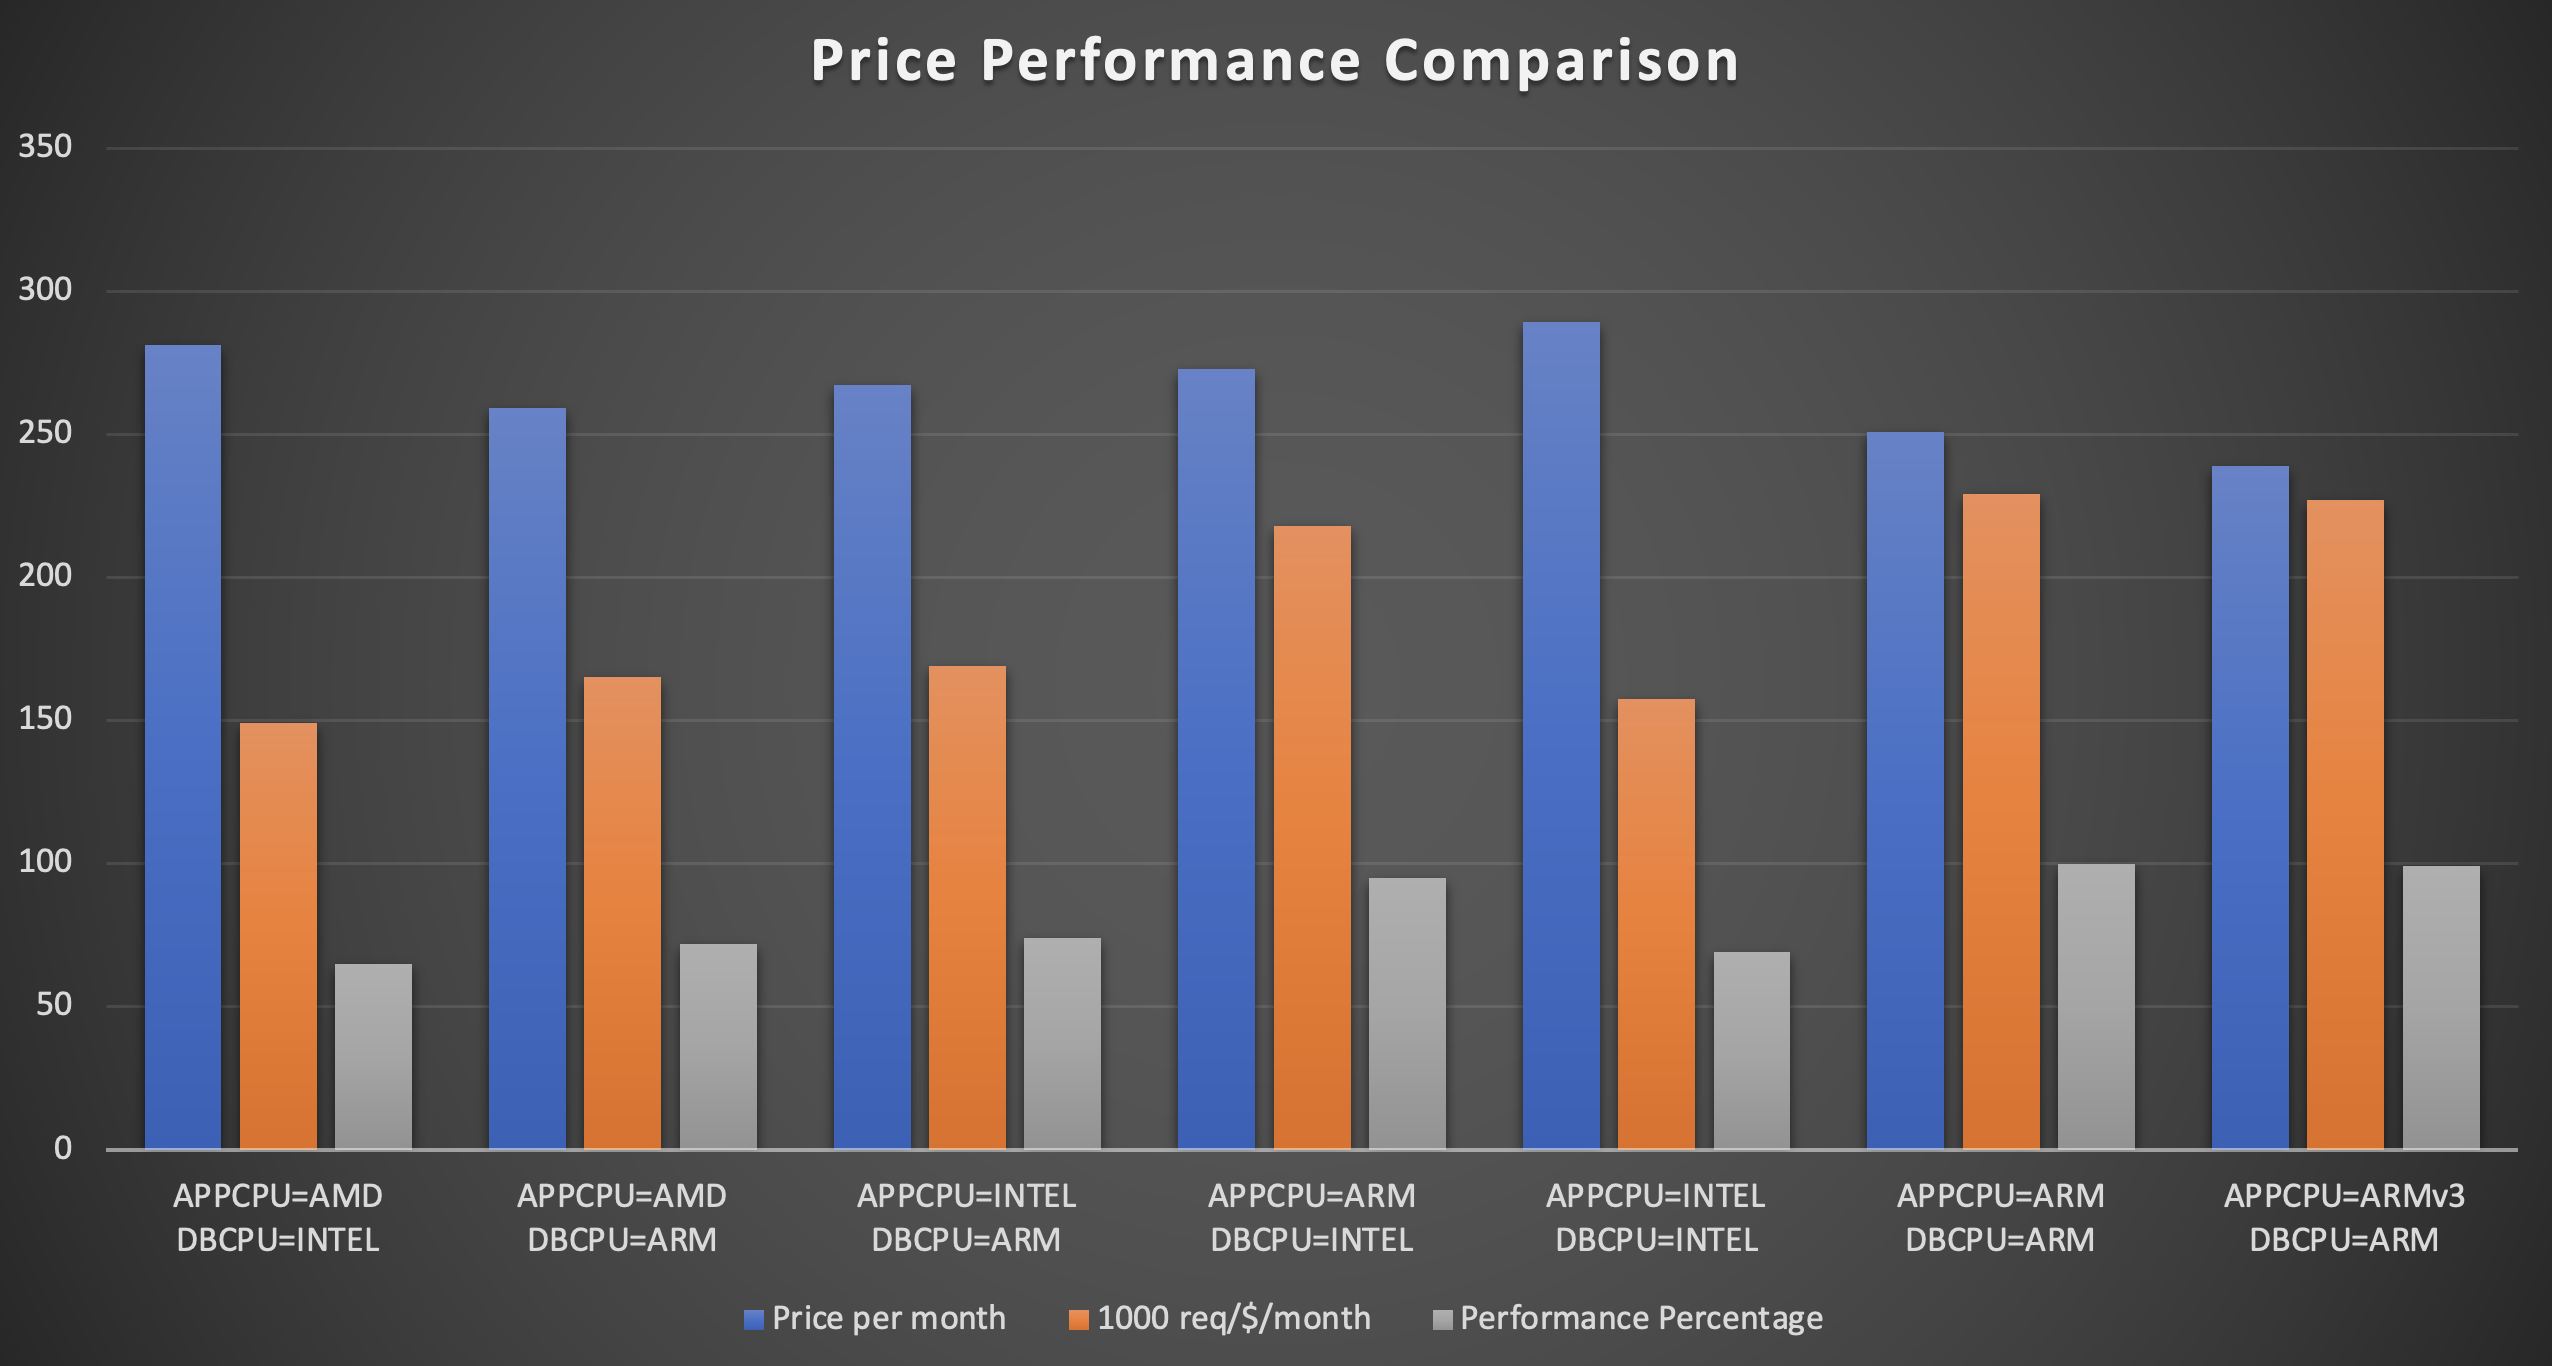 Price Performance Comparison